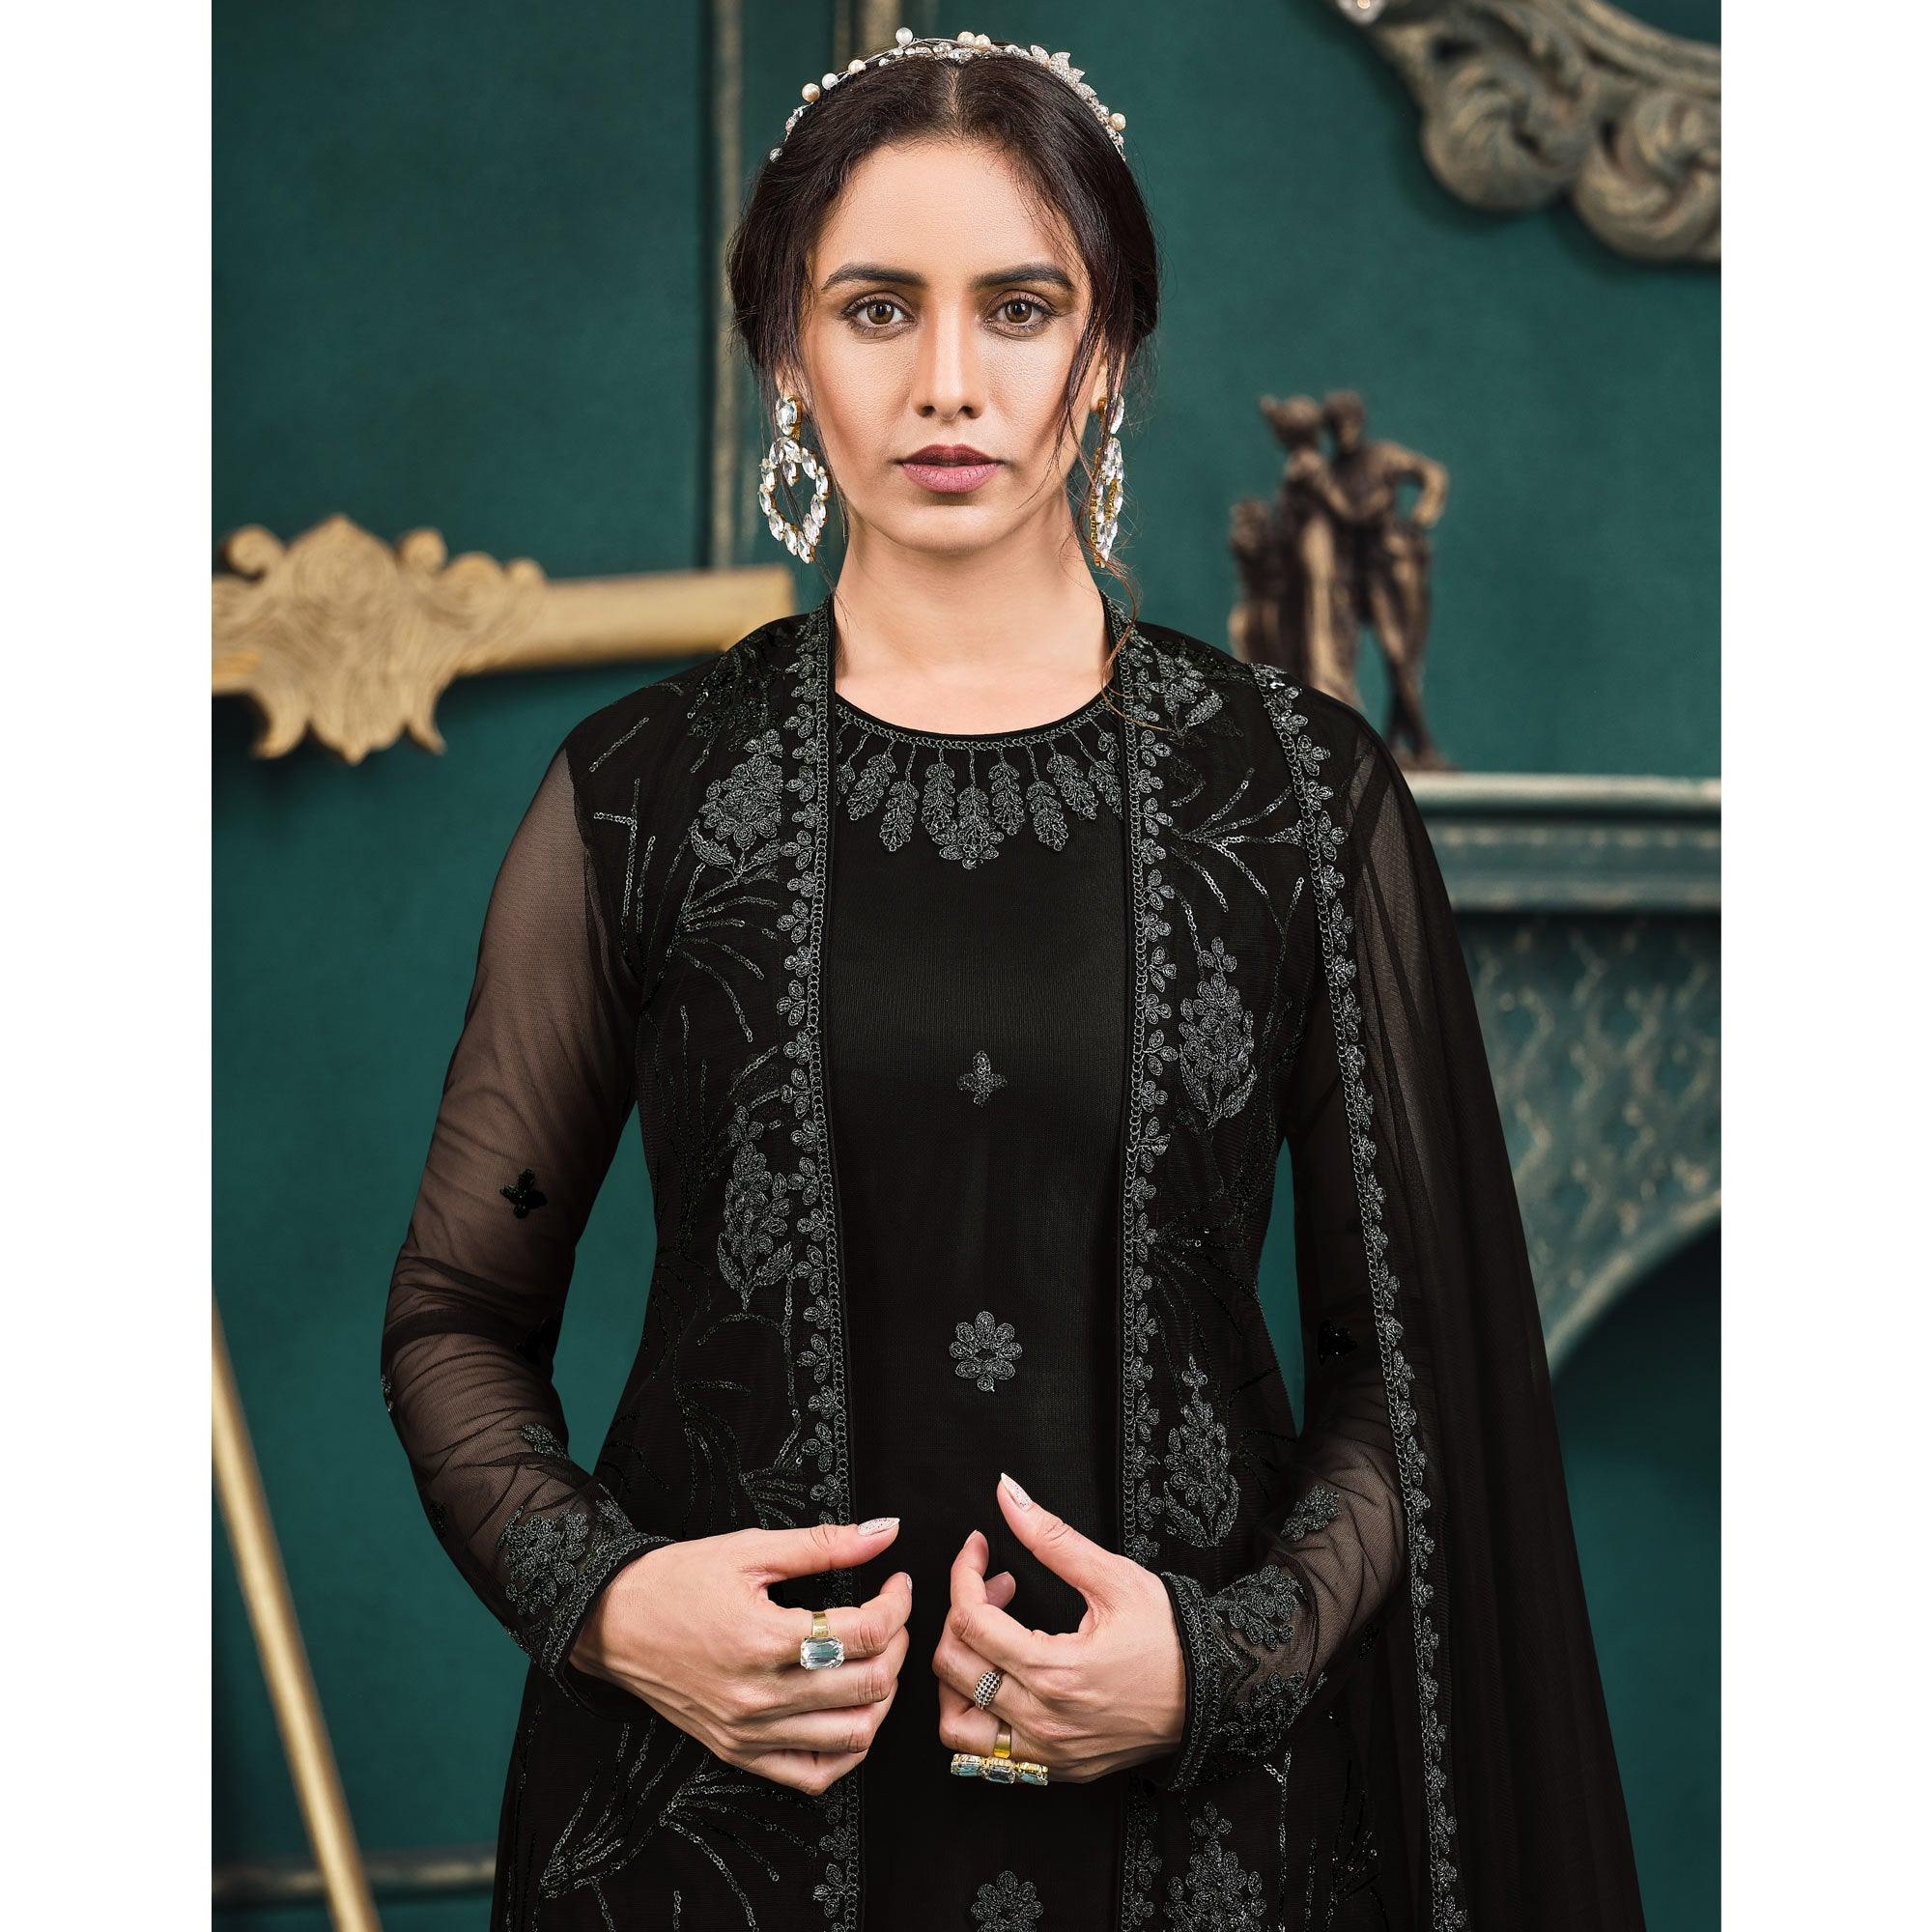 Bimba Black Net Anarkali Kurti Sheer Sleeve Indian Blouse Indowestern Kurta  at Amazon Women's Clothing store